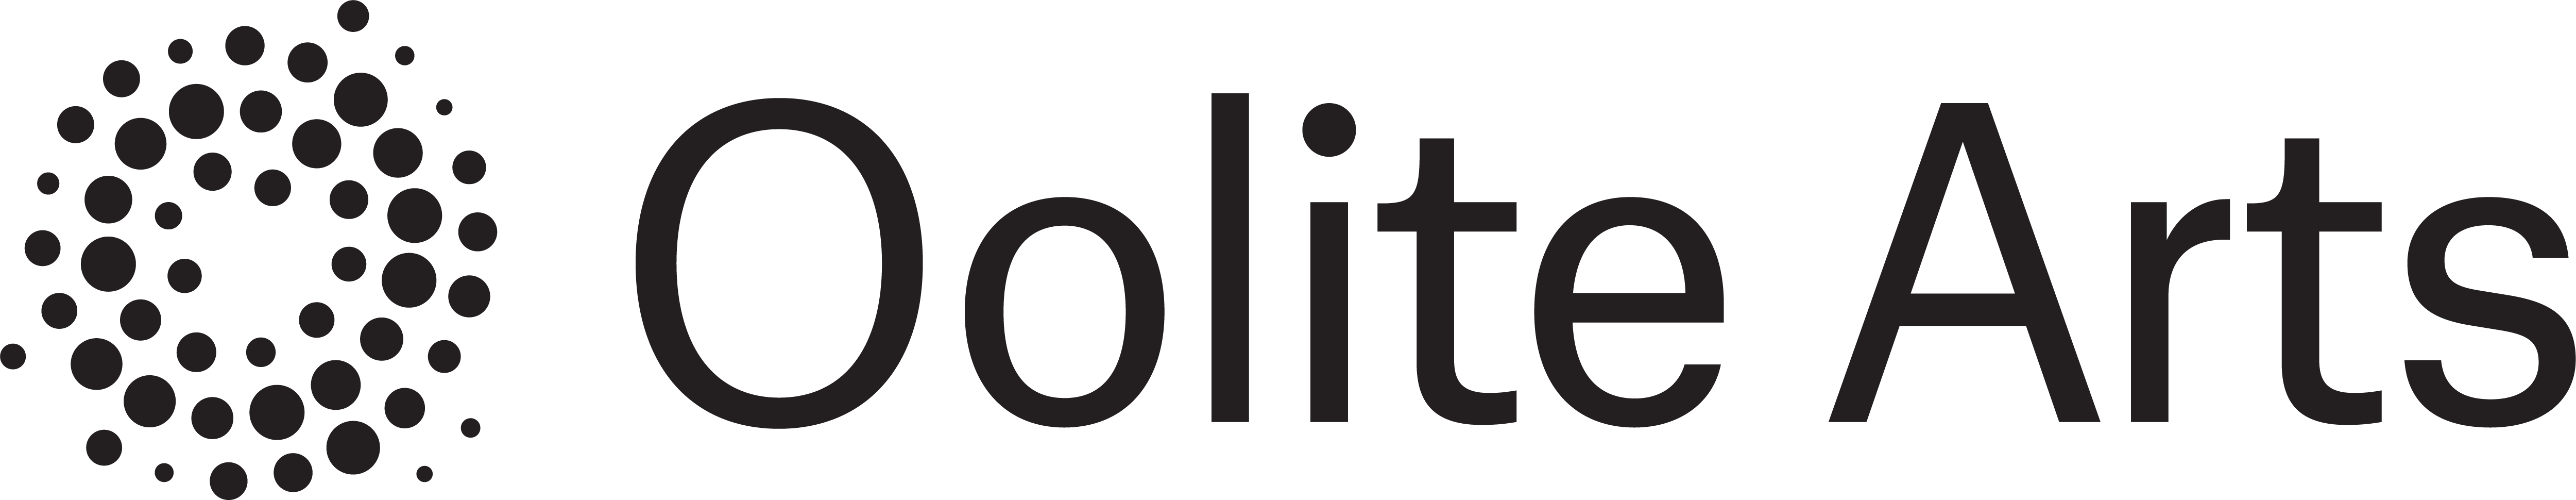 Oolite Arts Logo